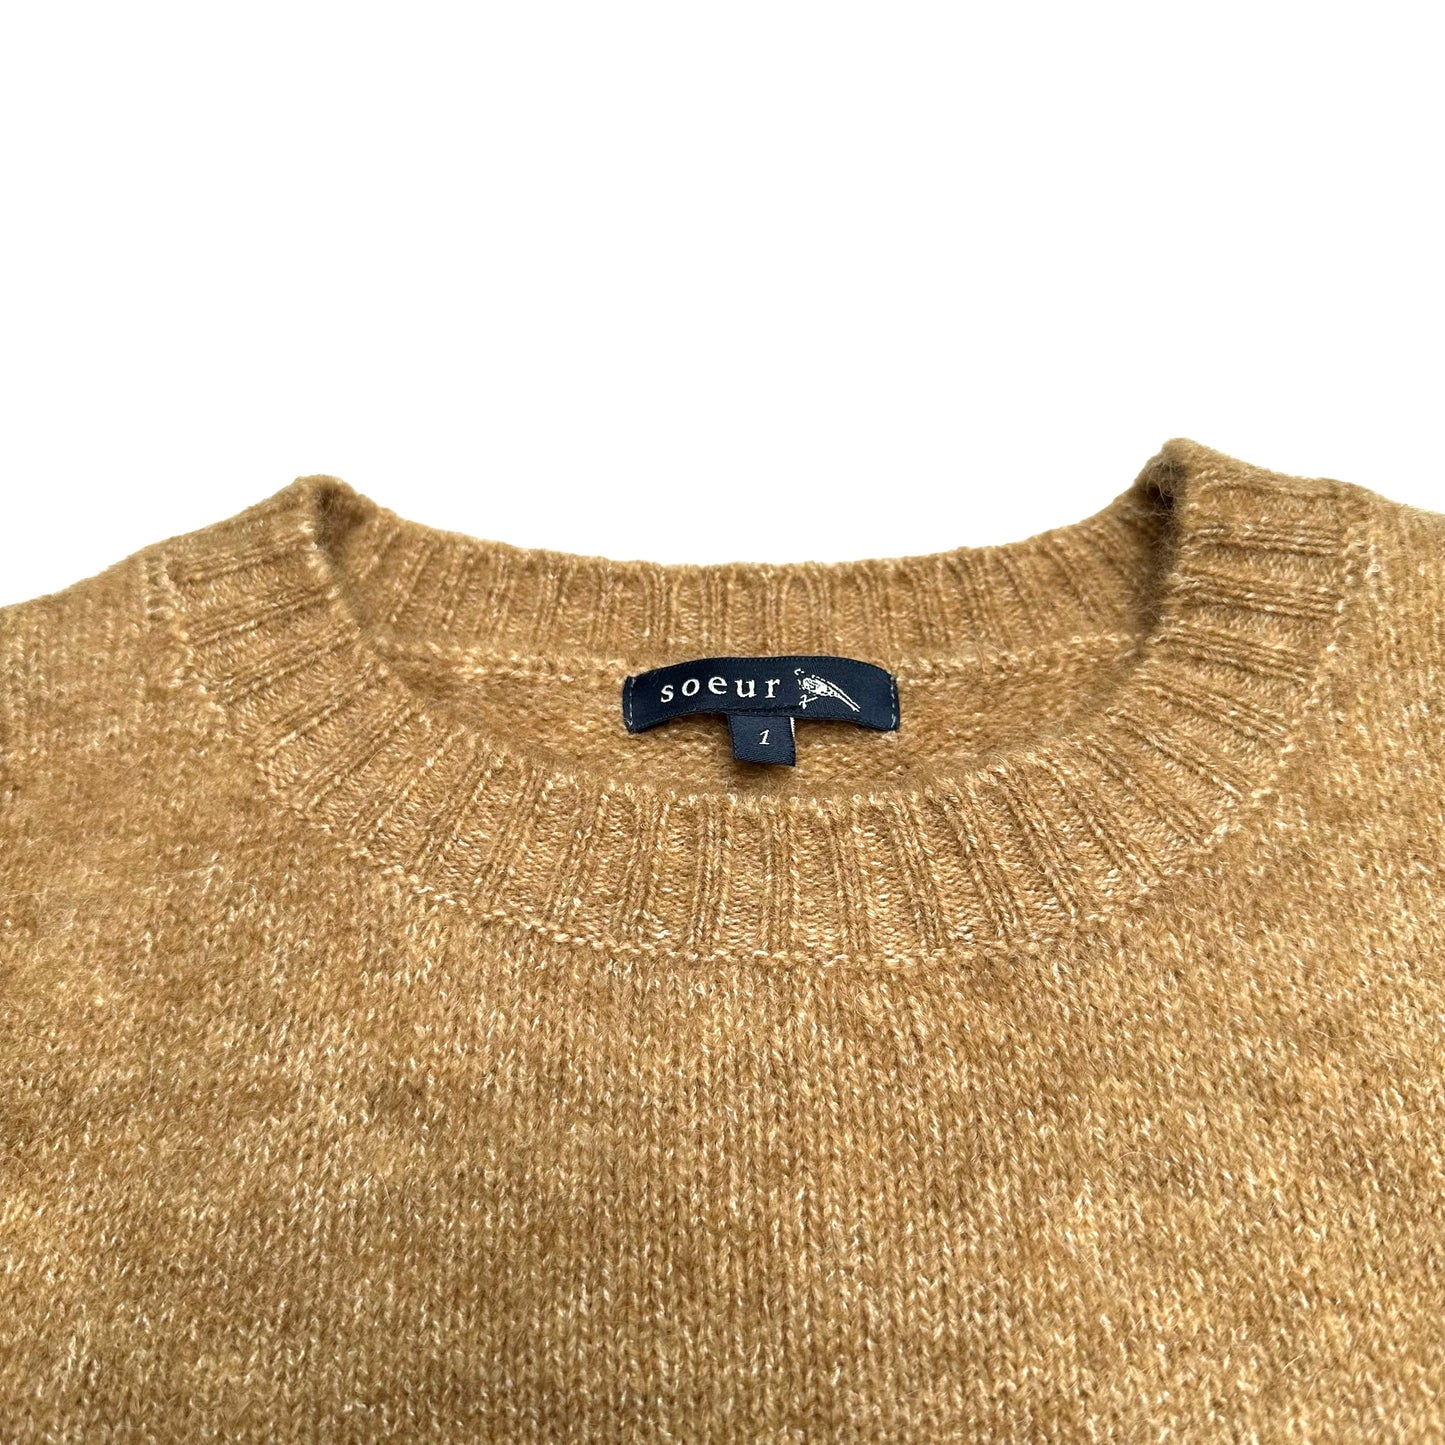 Soft Beige Sweater - S